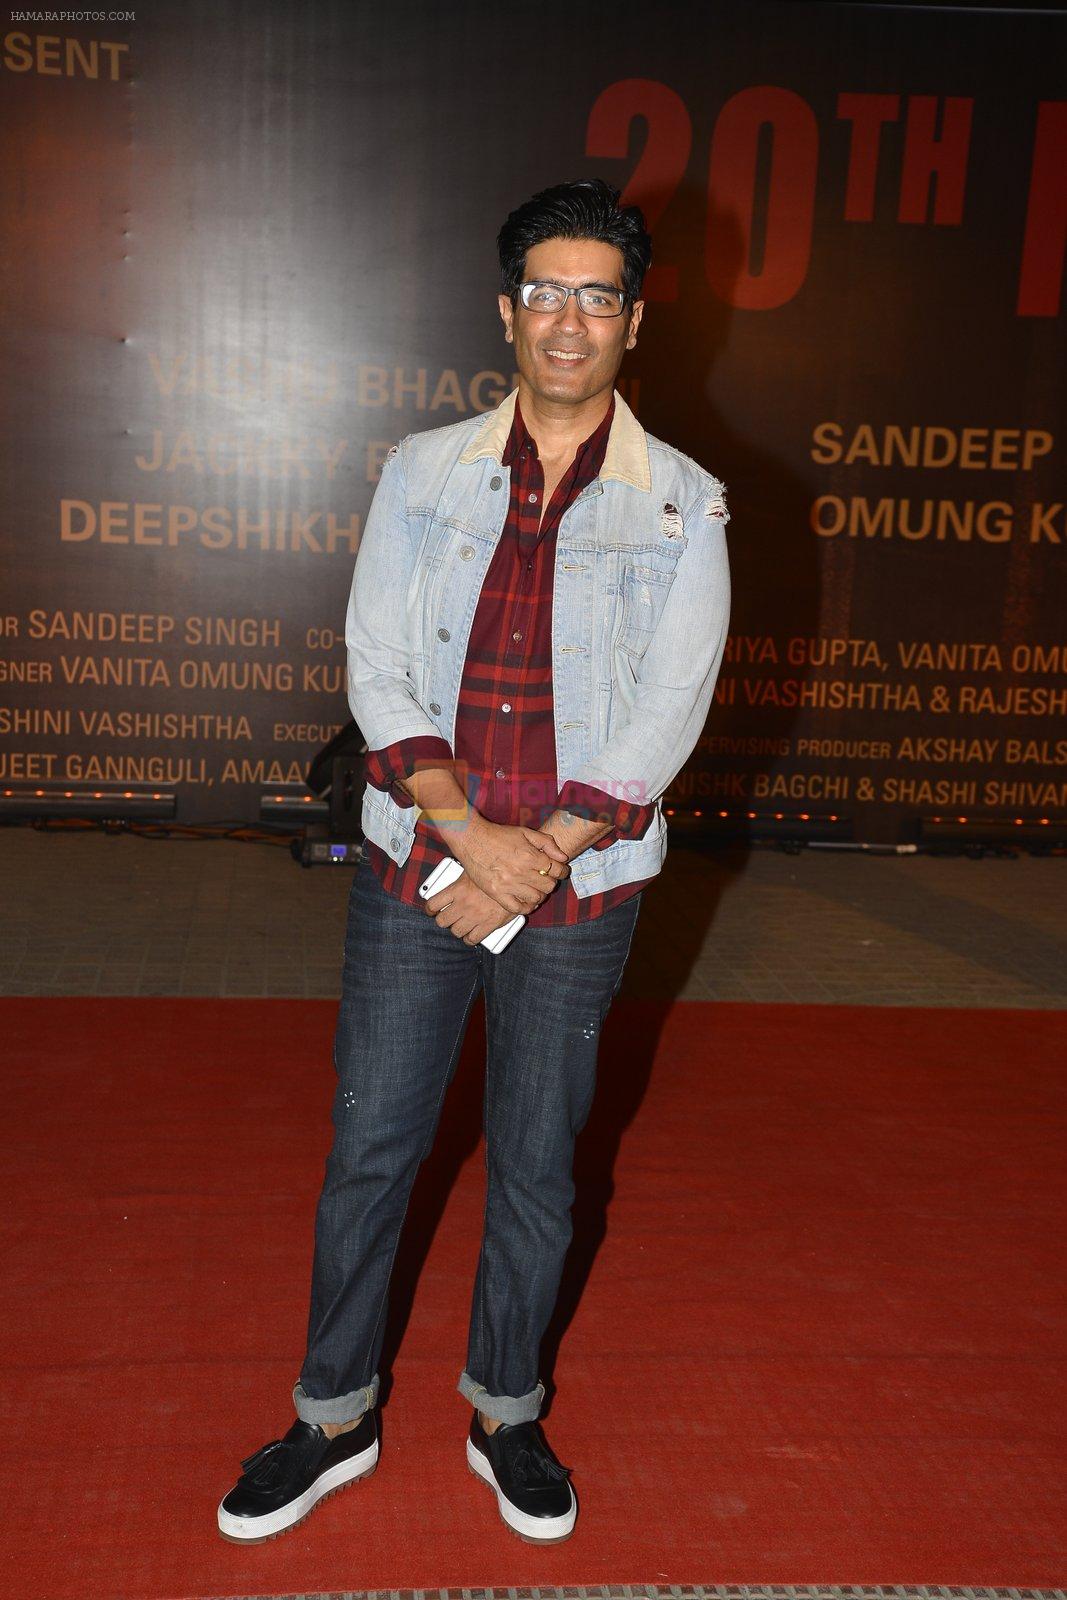 Manish Malhotra at Sarbjit Premiere in Mumbai on 18th May 2016